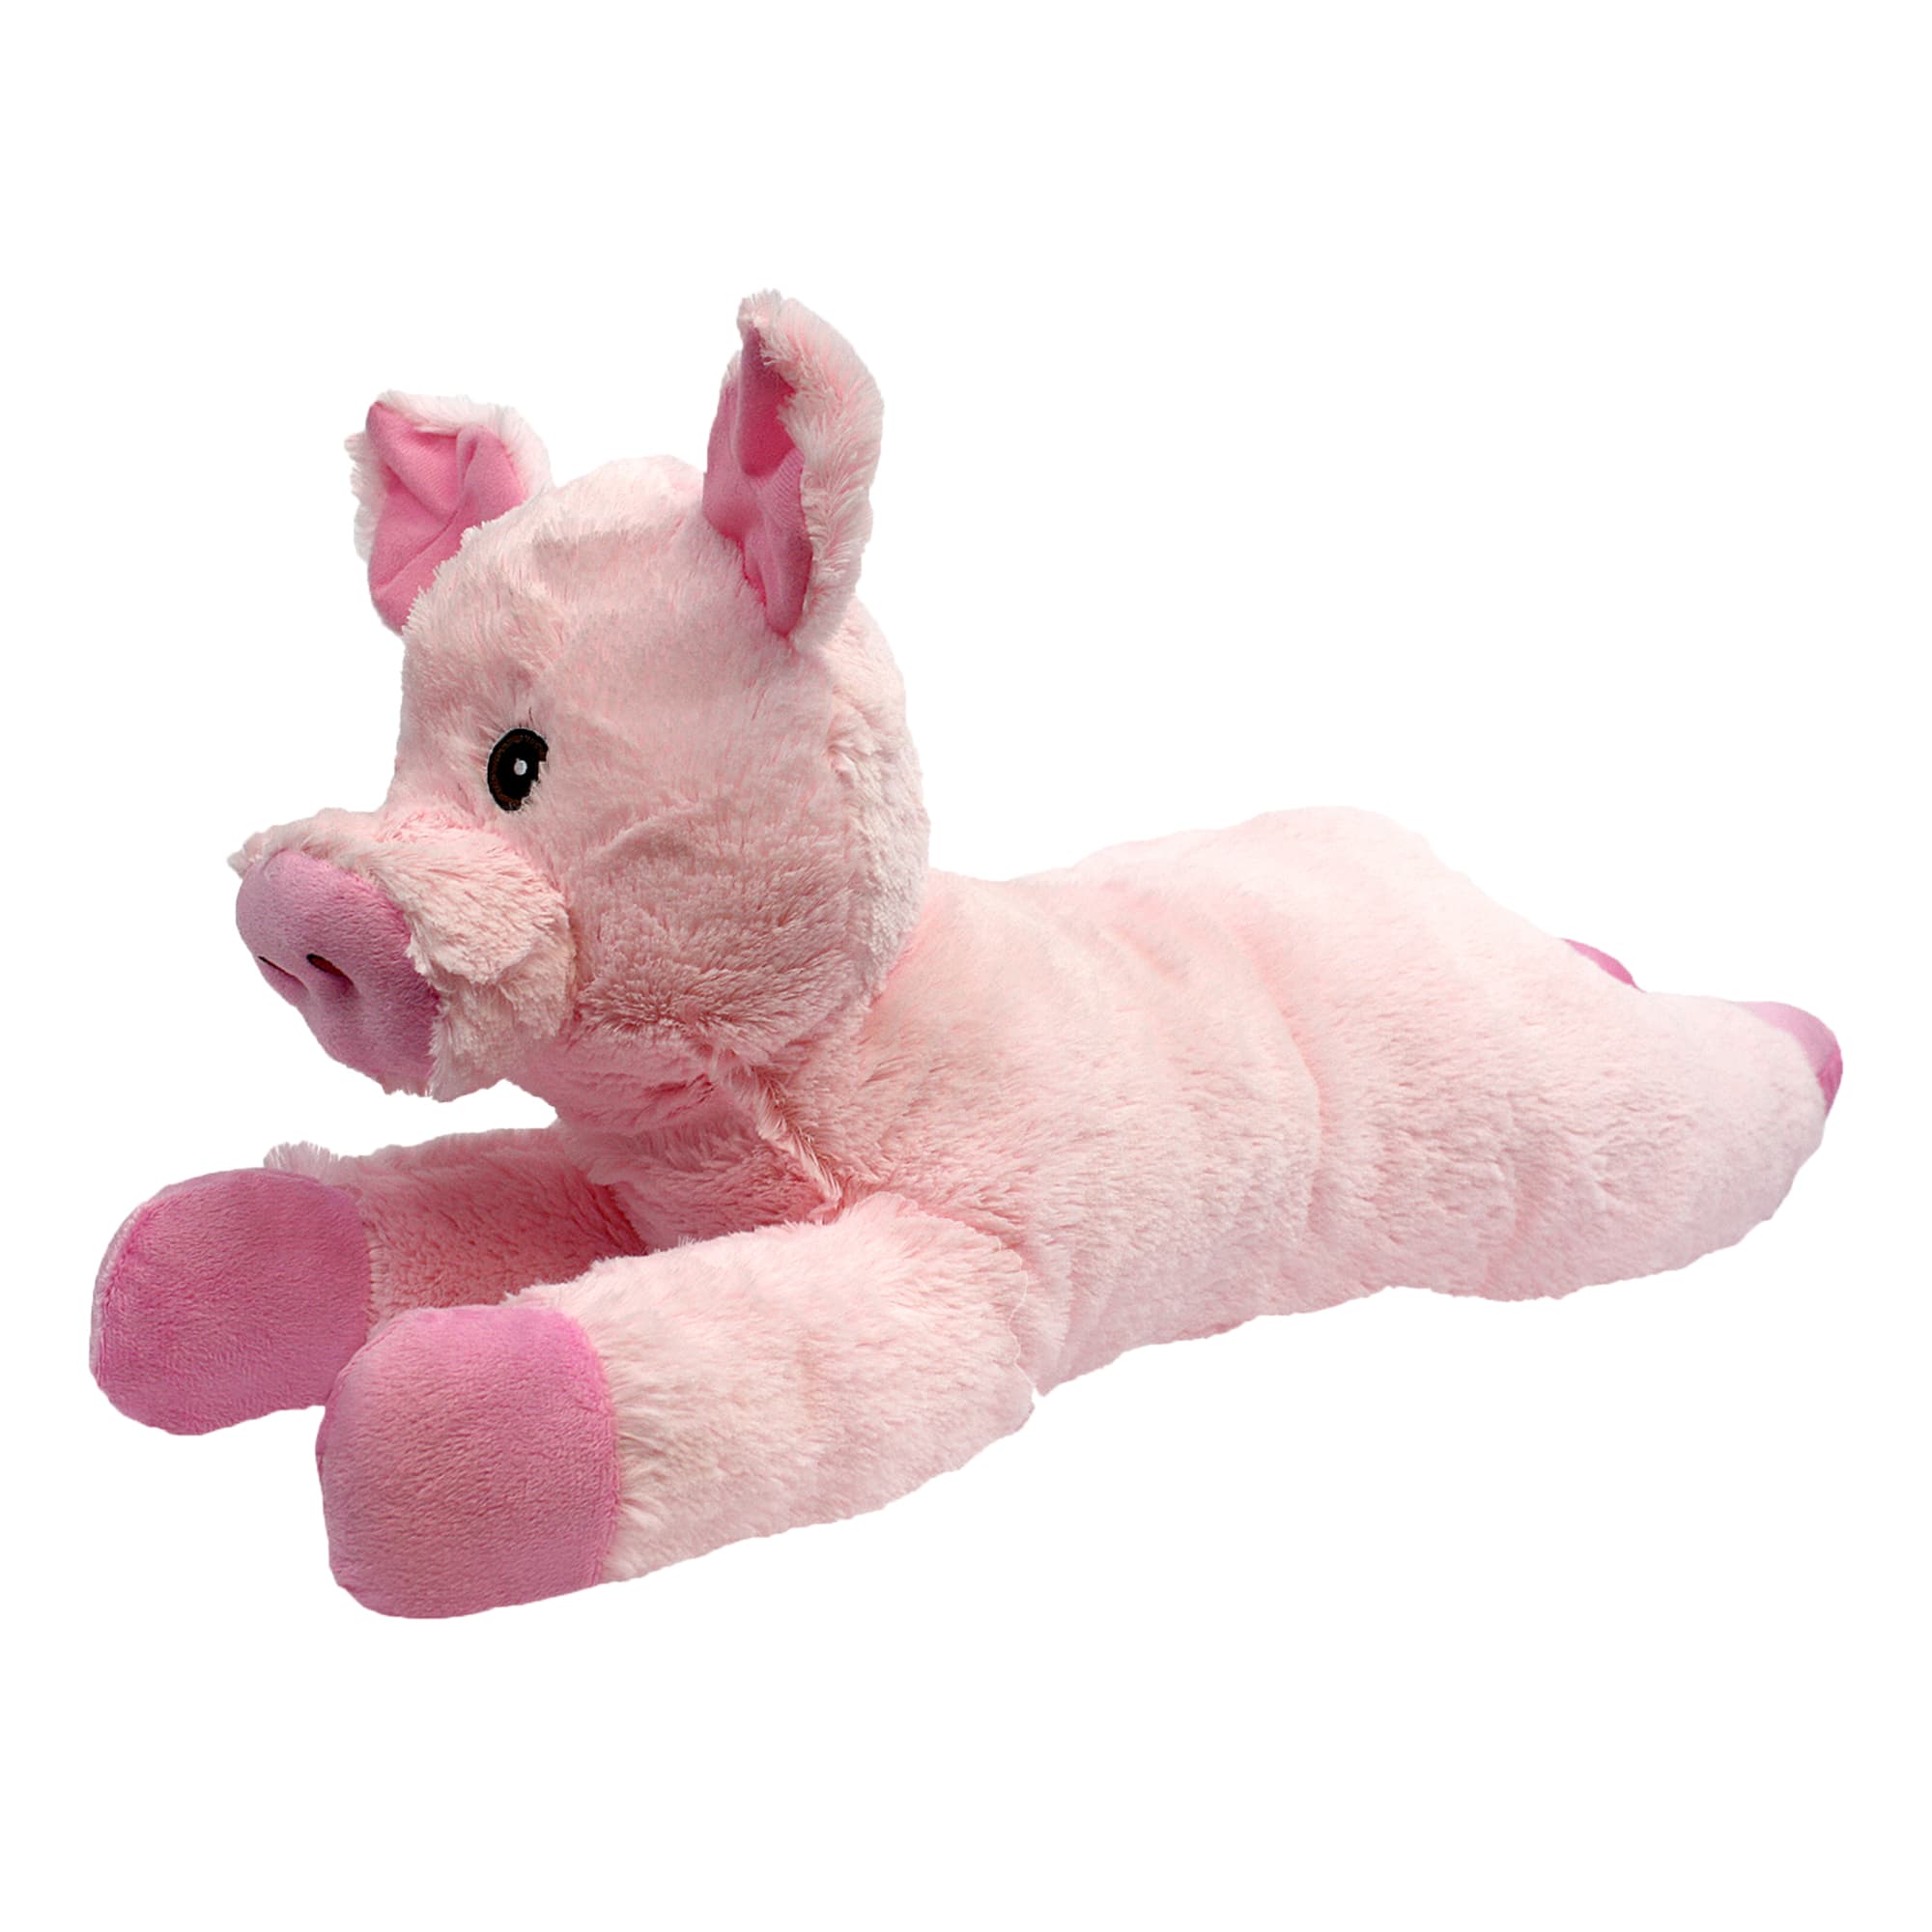 soft pink pig dog toy